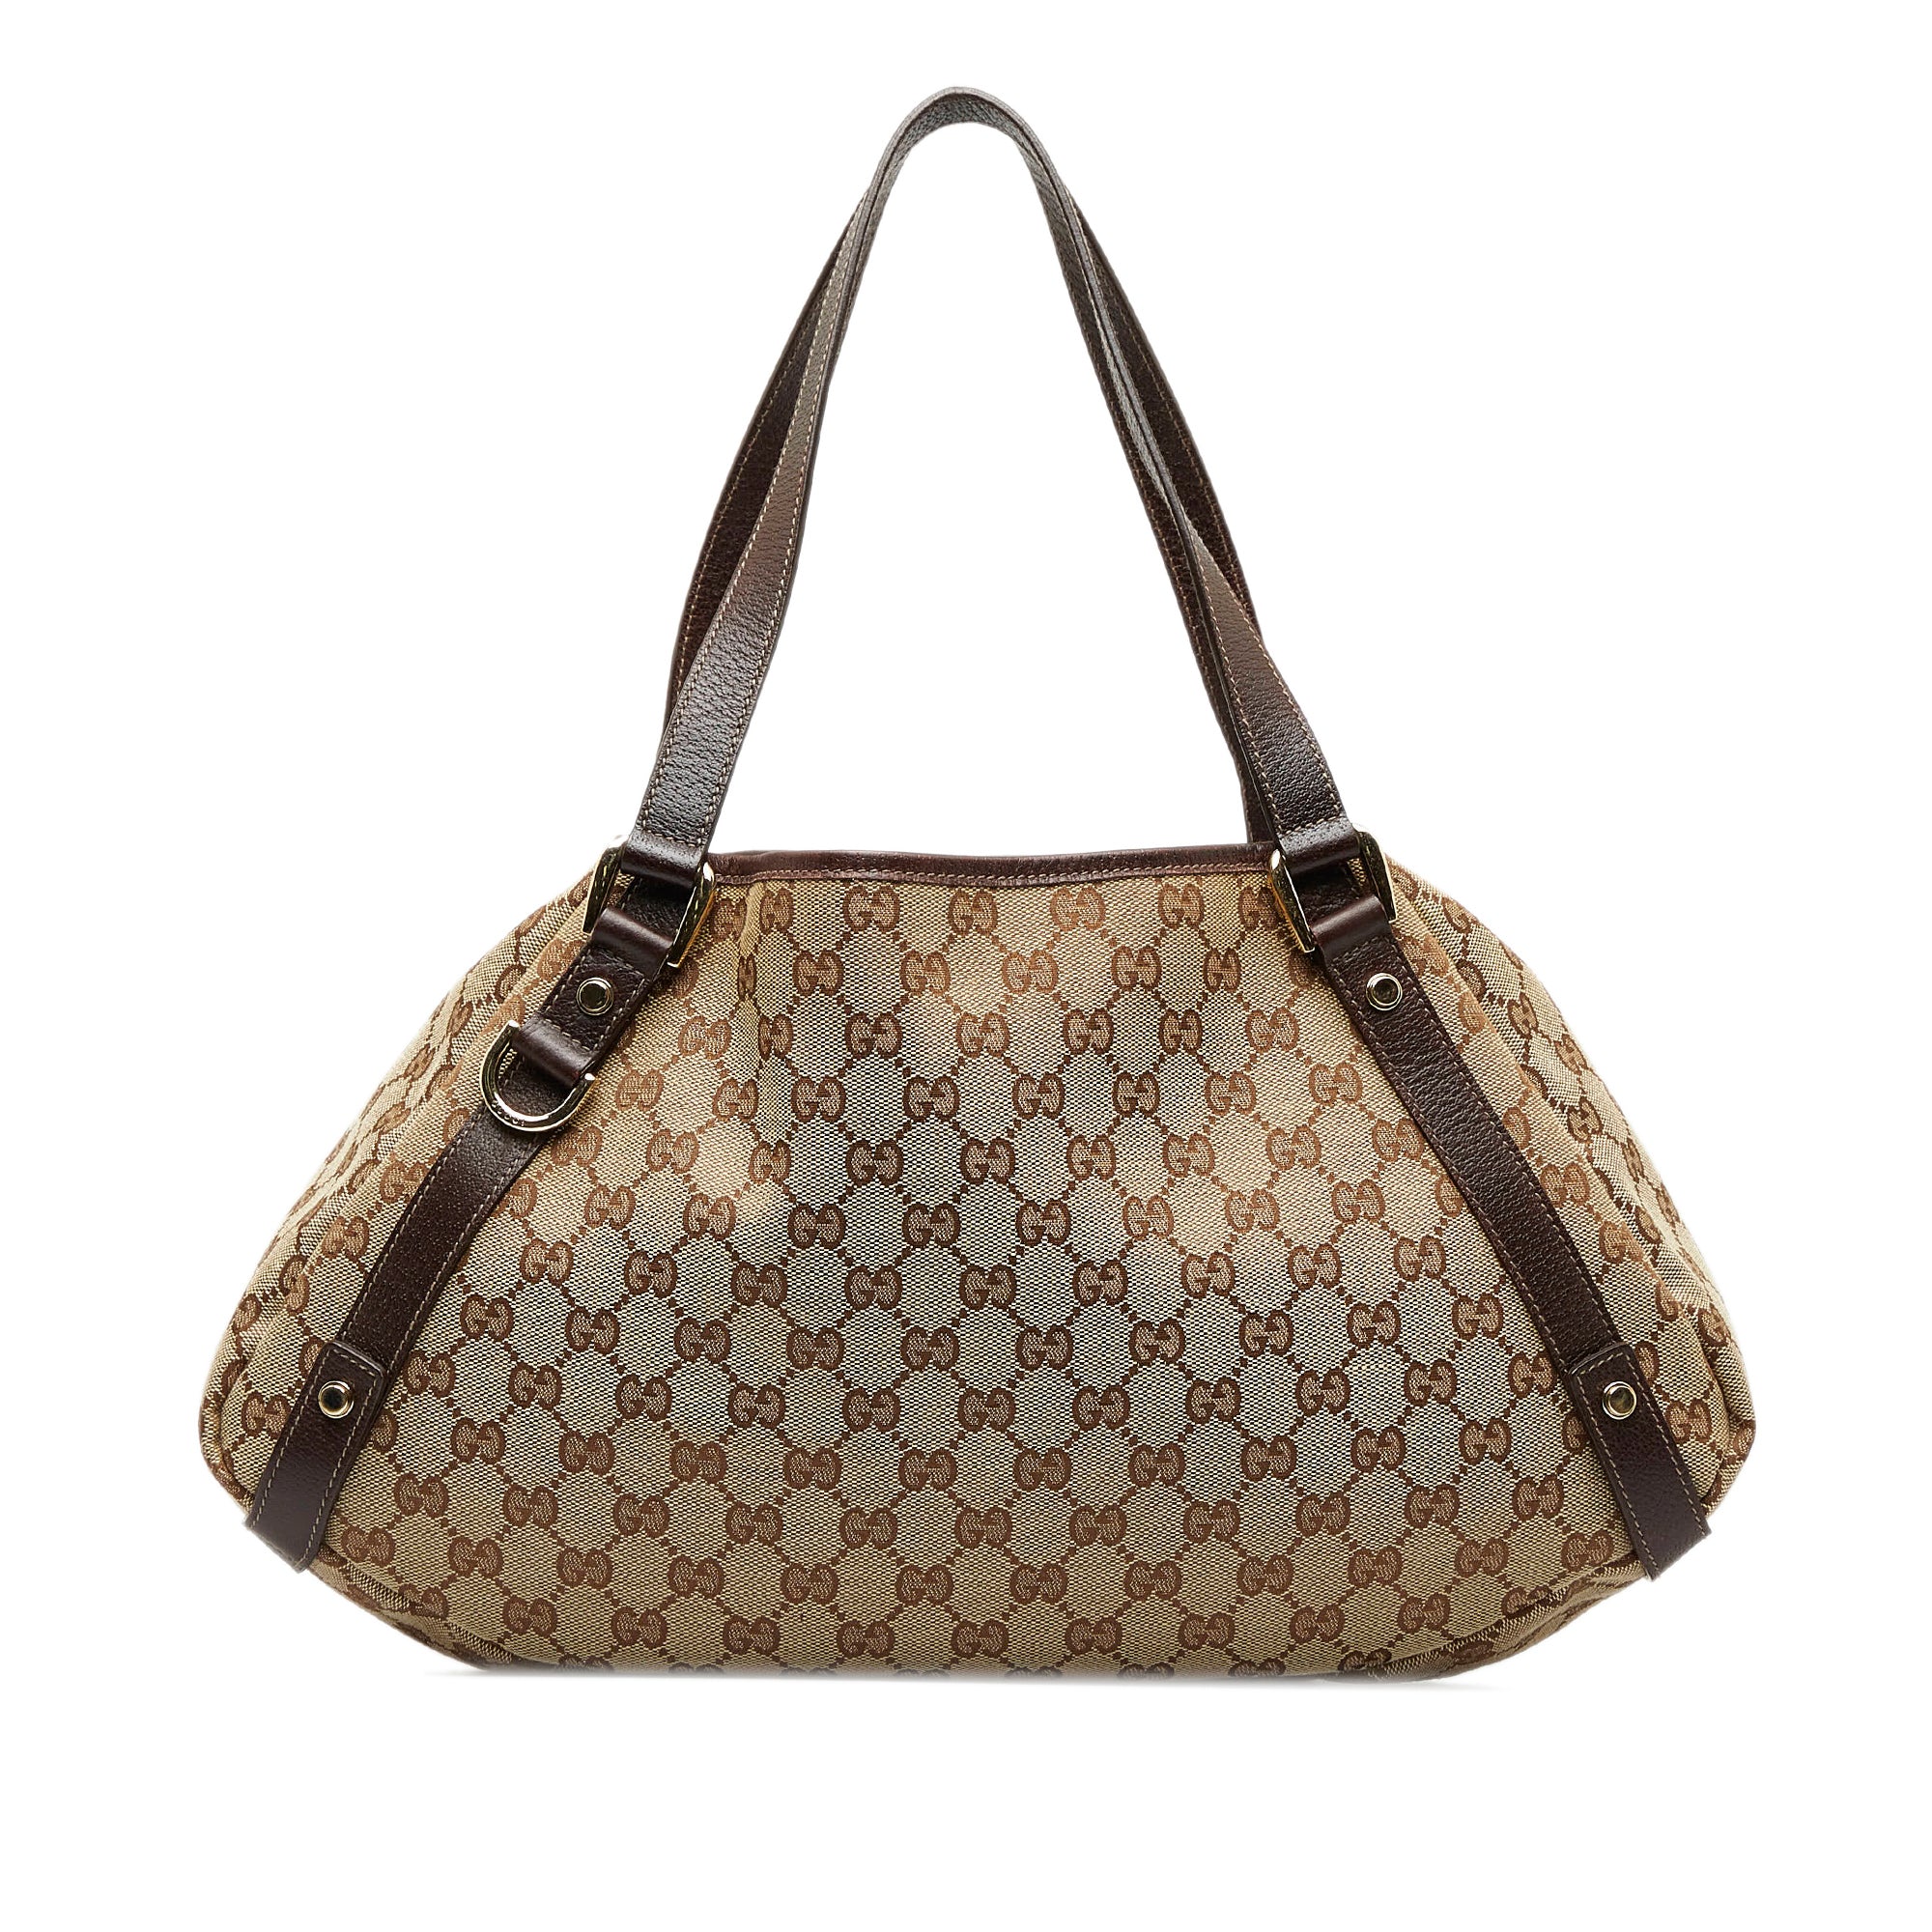 Louis Vuitton - Authenticated Handbag - Patent Leather Green Plain for Women, Good Condition